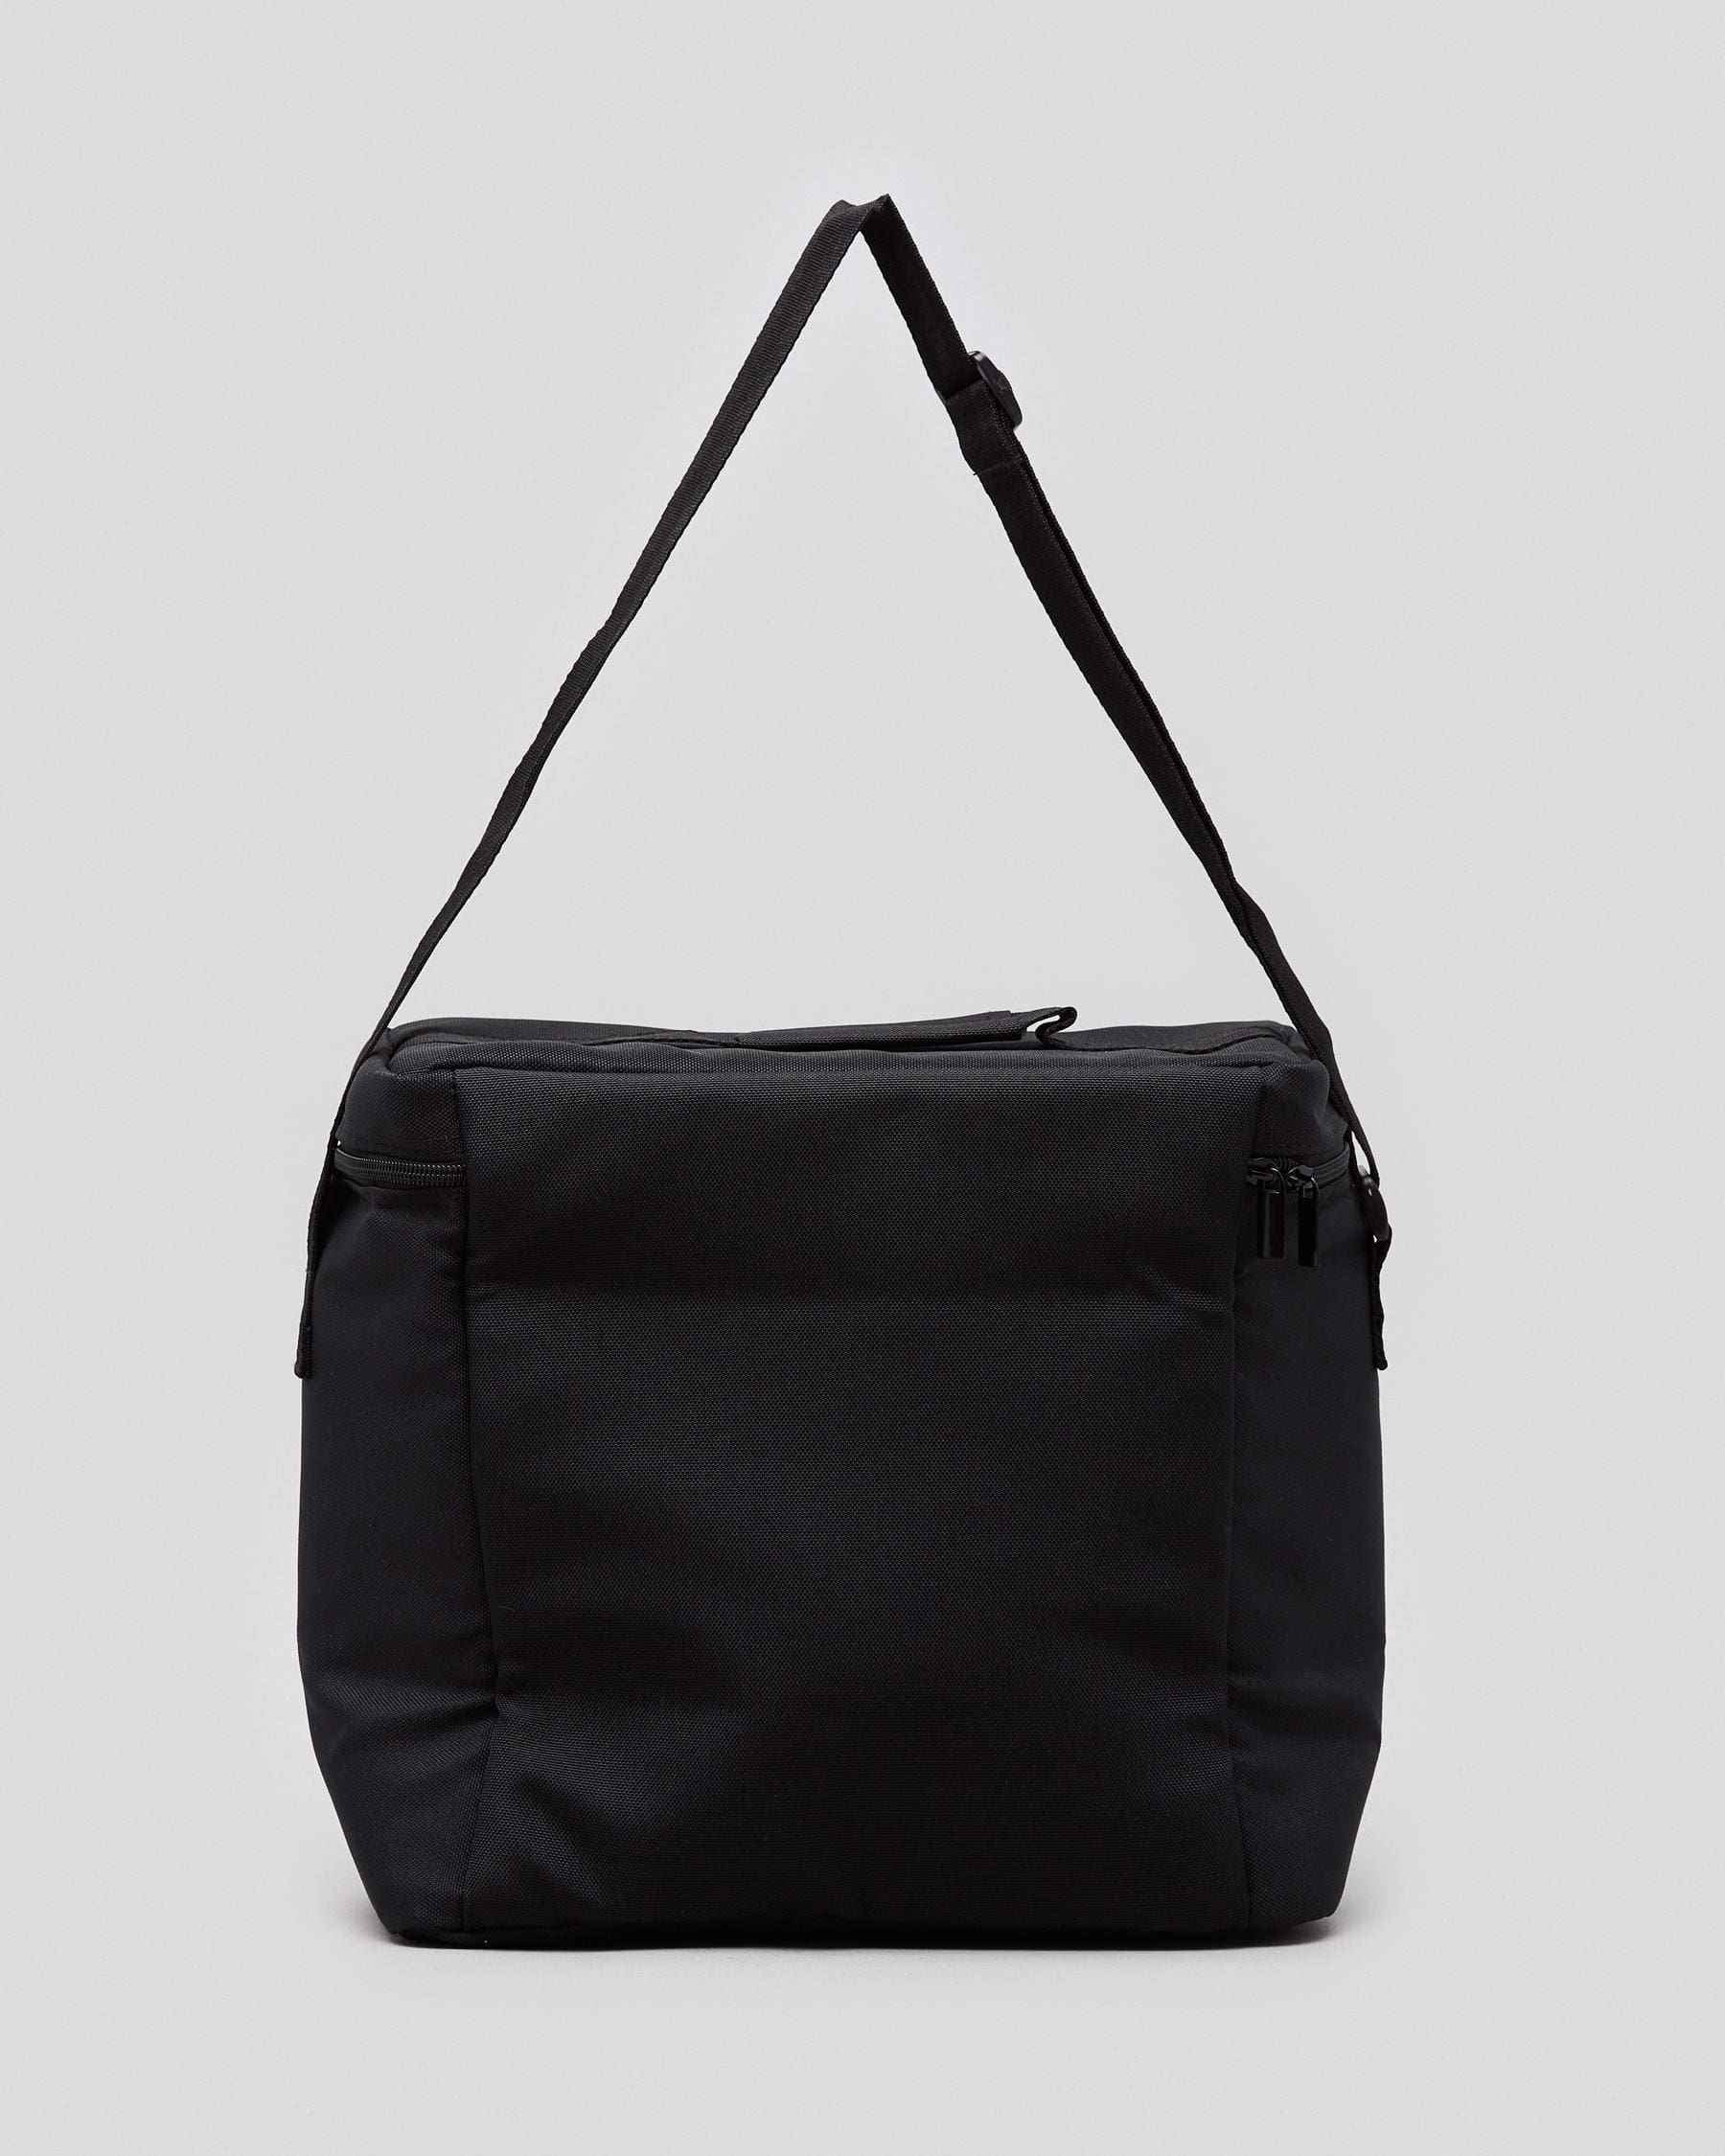 HMRD Smoko Cooler Bag In Black - Fast Shipping & Easy Returns - City ...